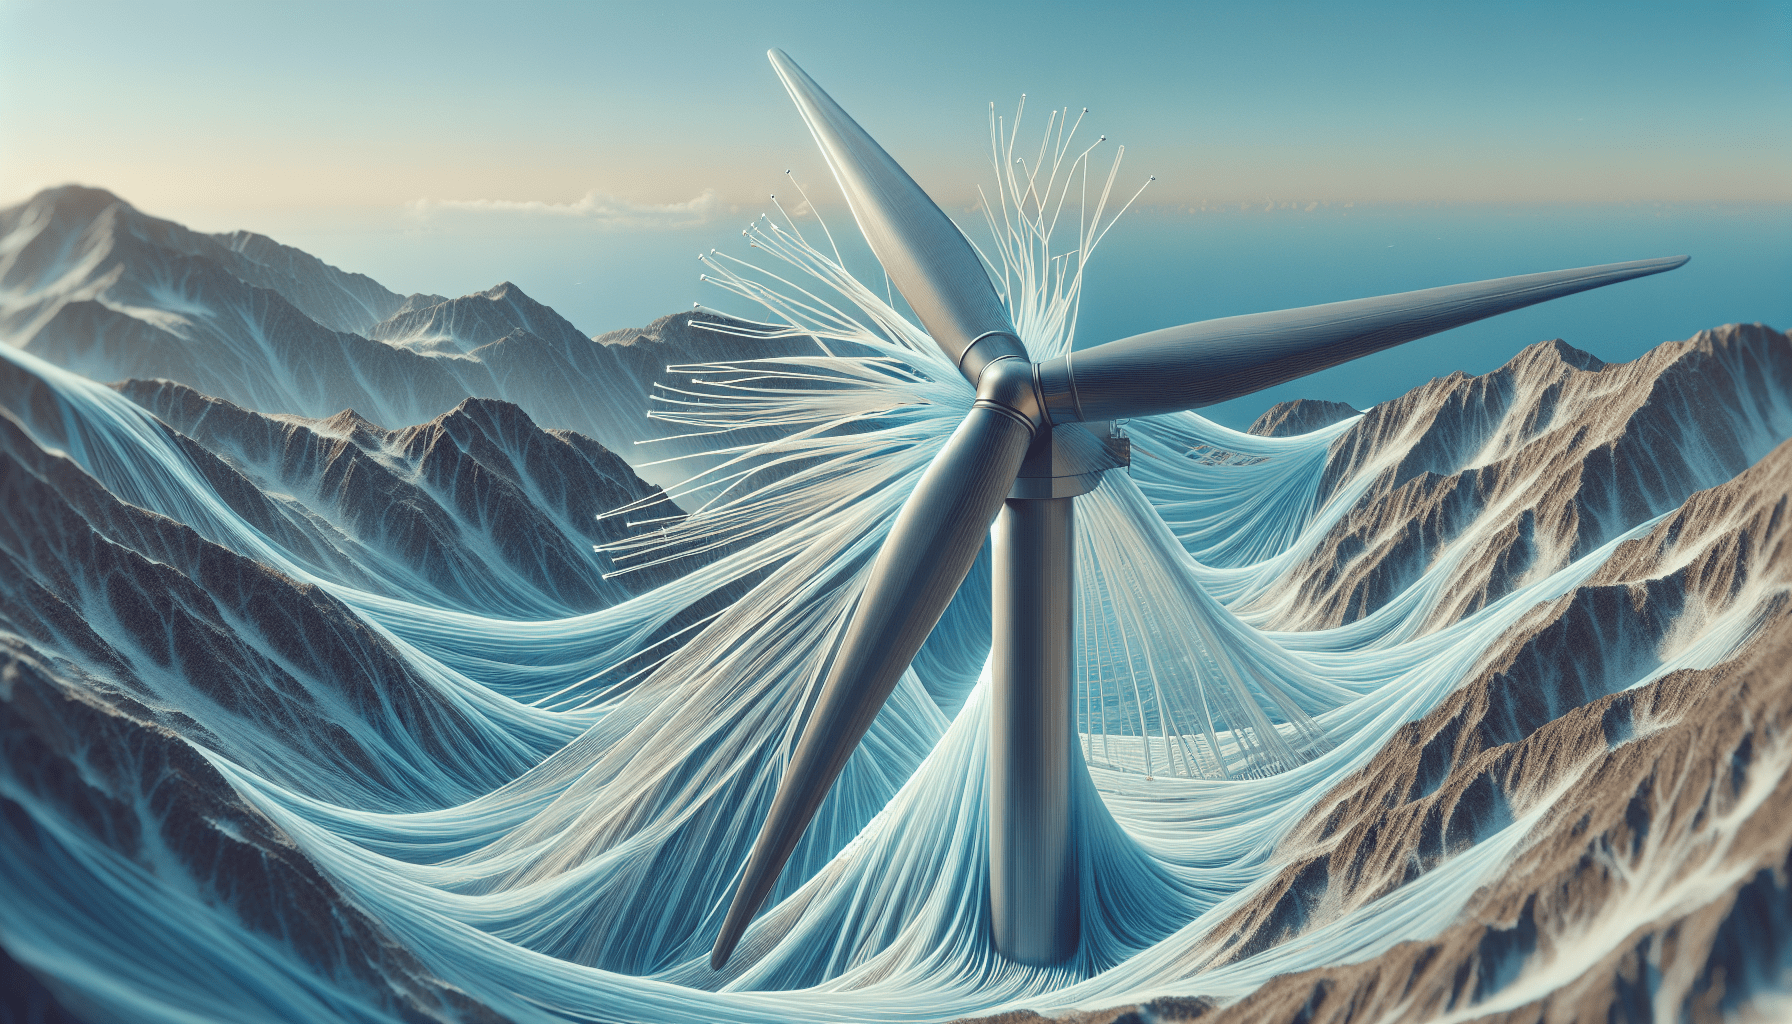 virginia-tech-researchers-aim-to-revolutionize-wind-turbine-sustainability-through-3d-printing-1 Virginia Tech Researchers Aim to Revolutionize Wind Turbine Sustainability Through 3D Printing